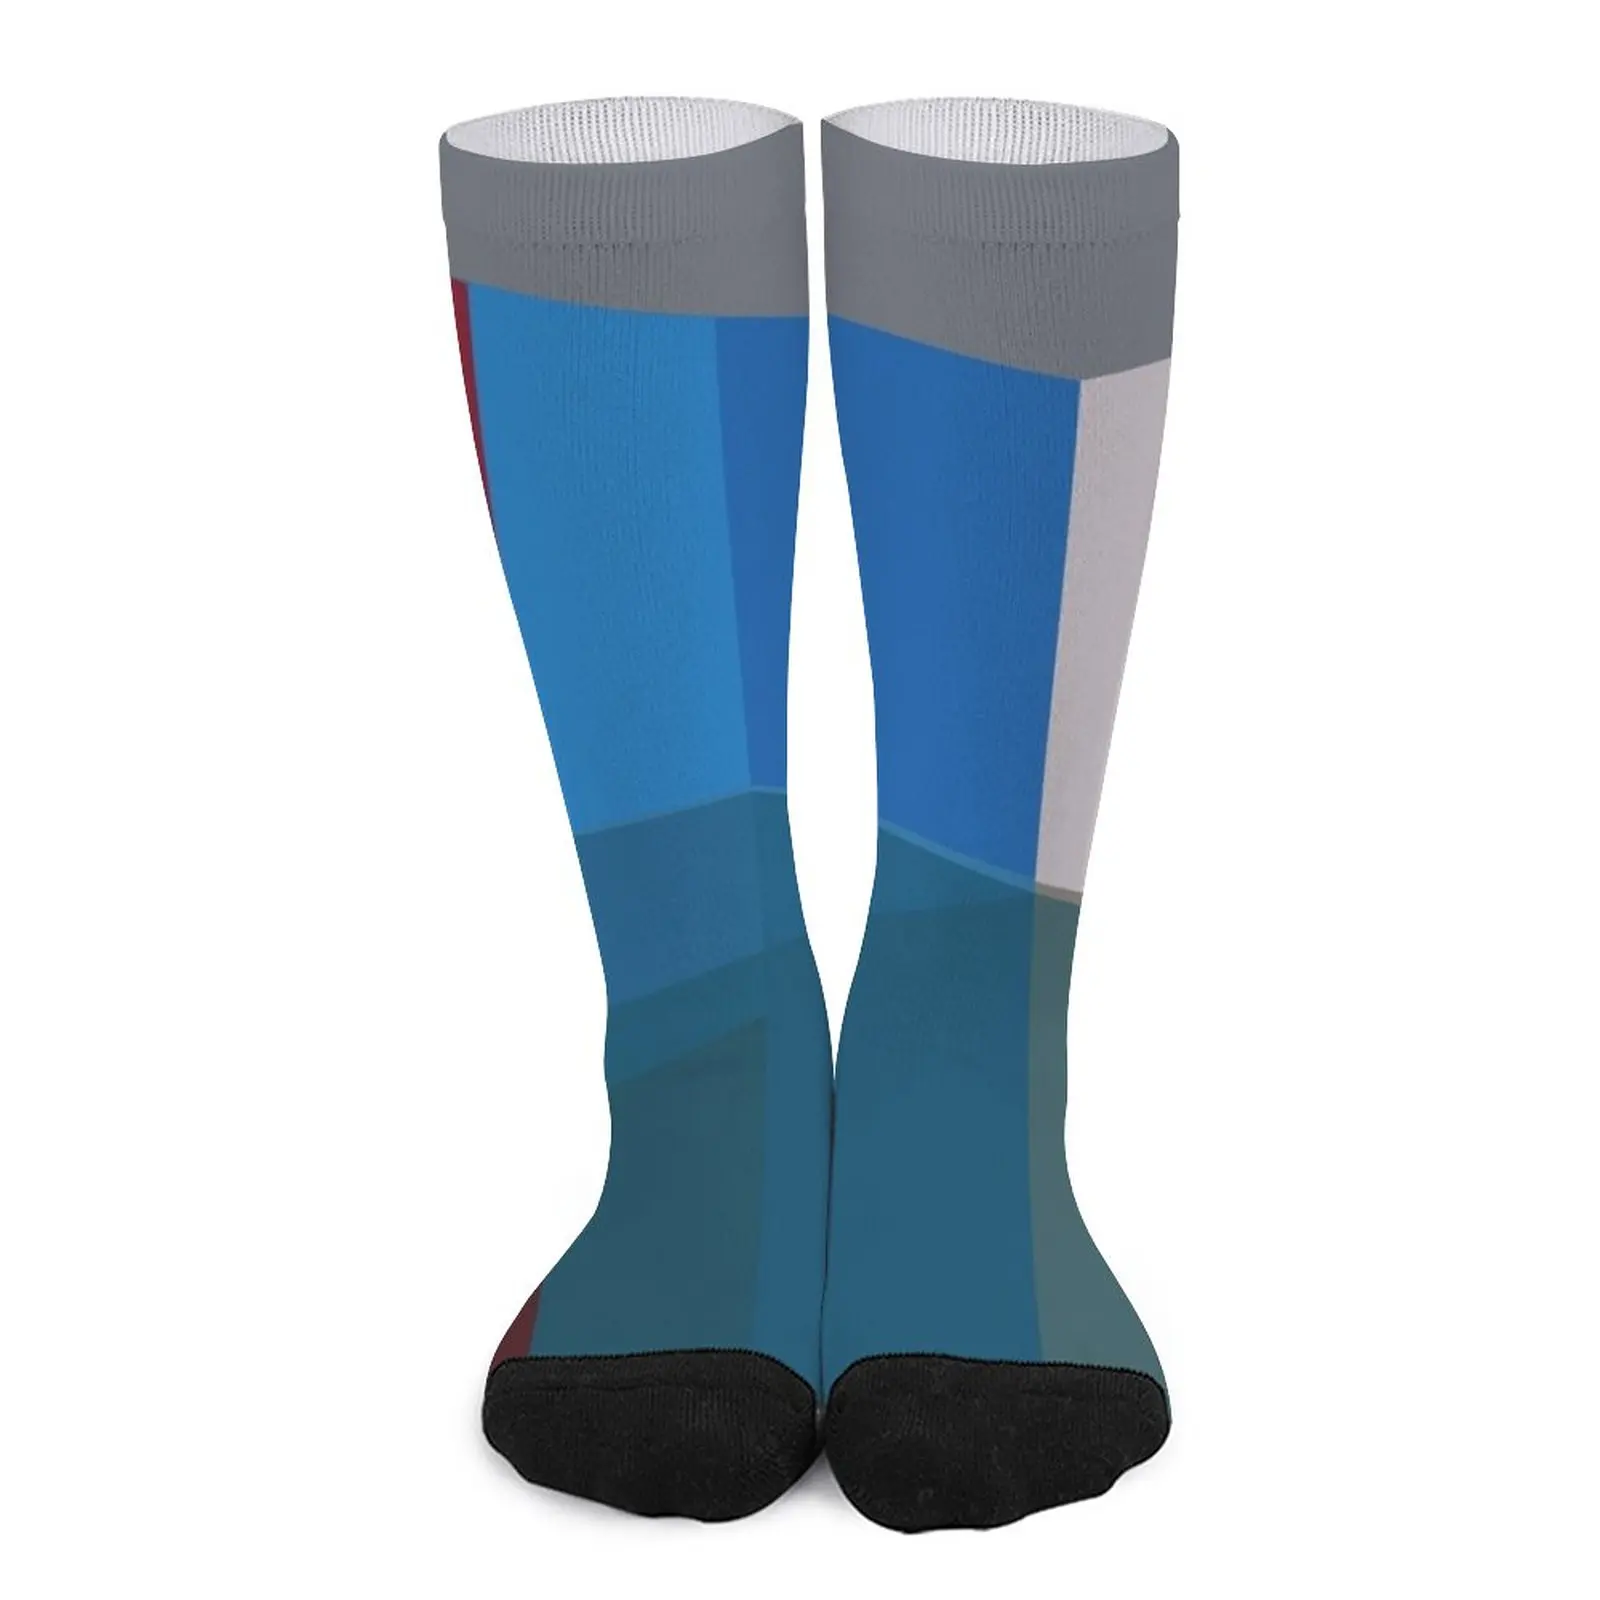 Gilardi House - Luis Barragán Socks compression socks Run ankle socks Children's socks